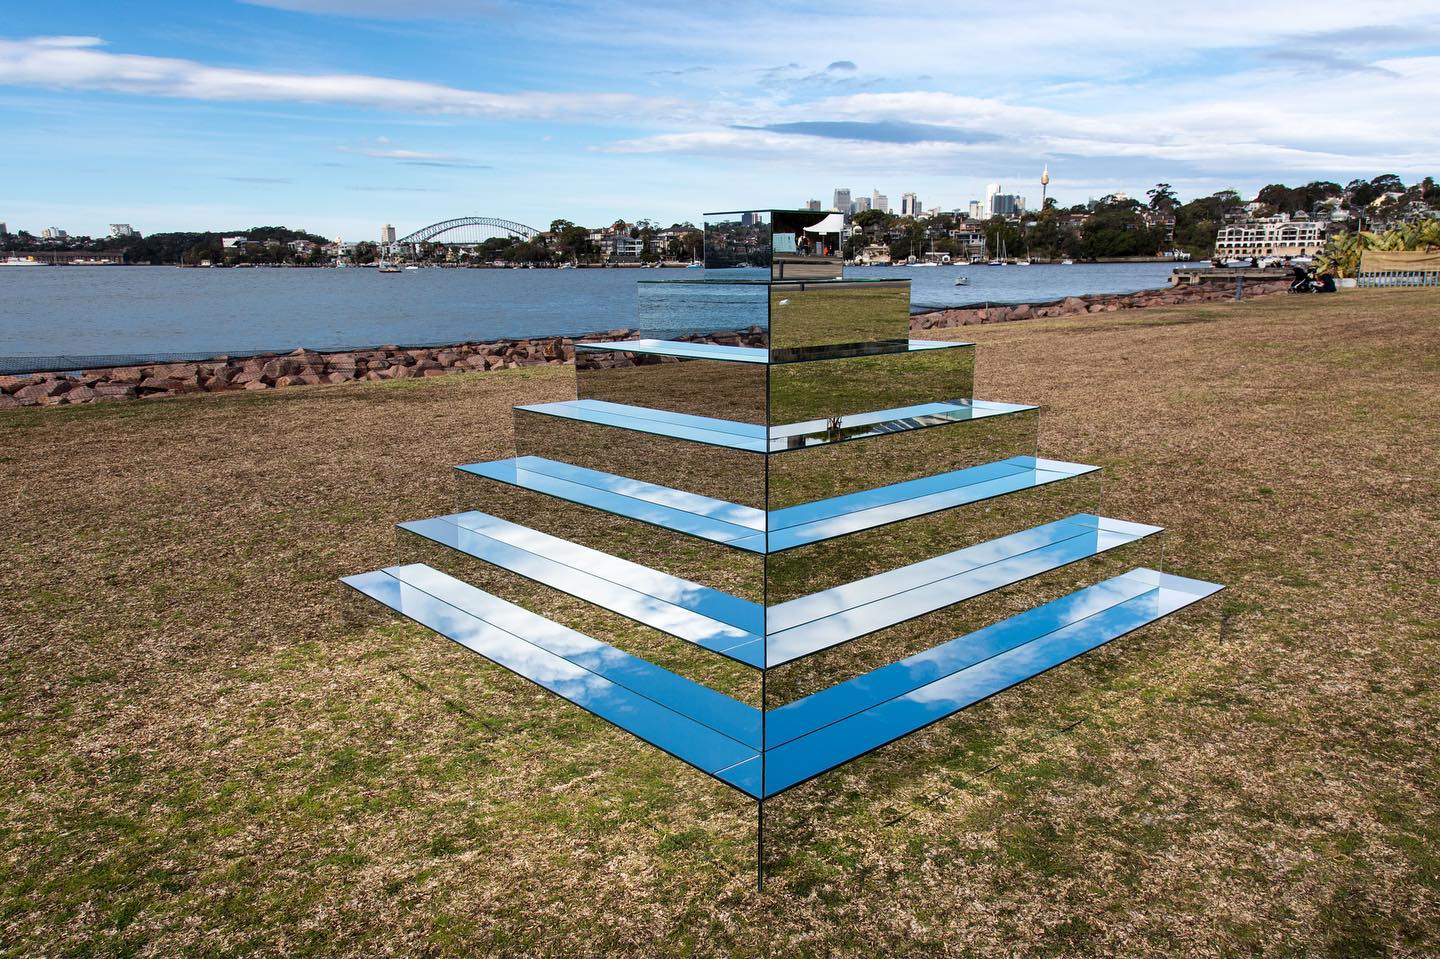 mirror installation outdoors that creates geometric illusion